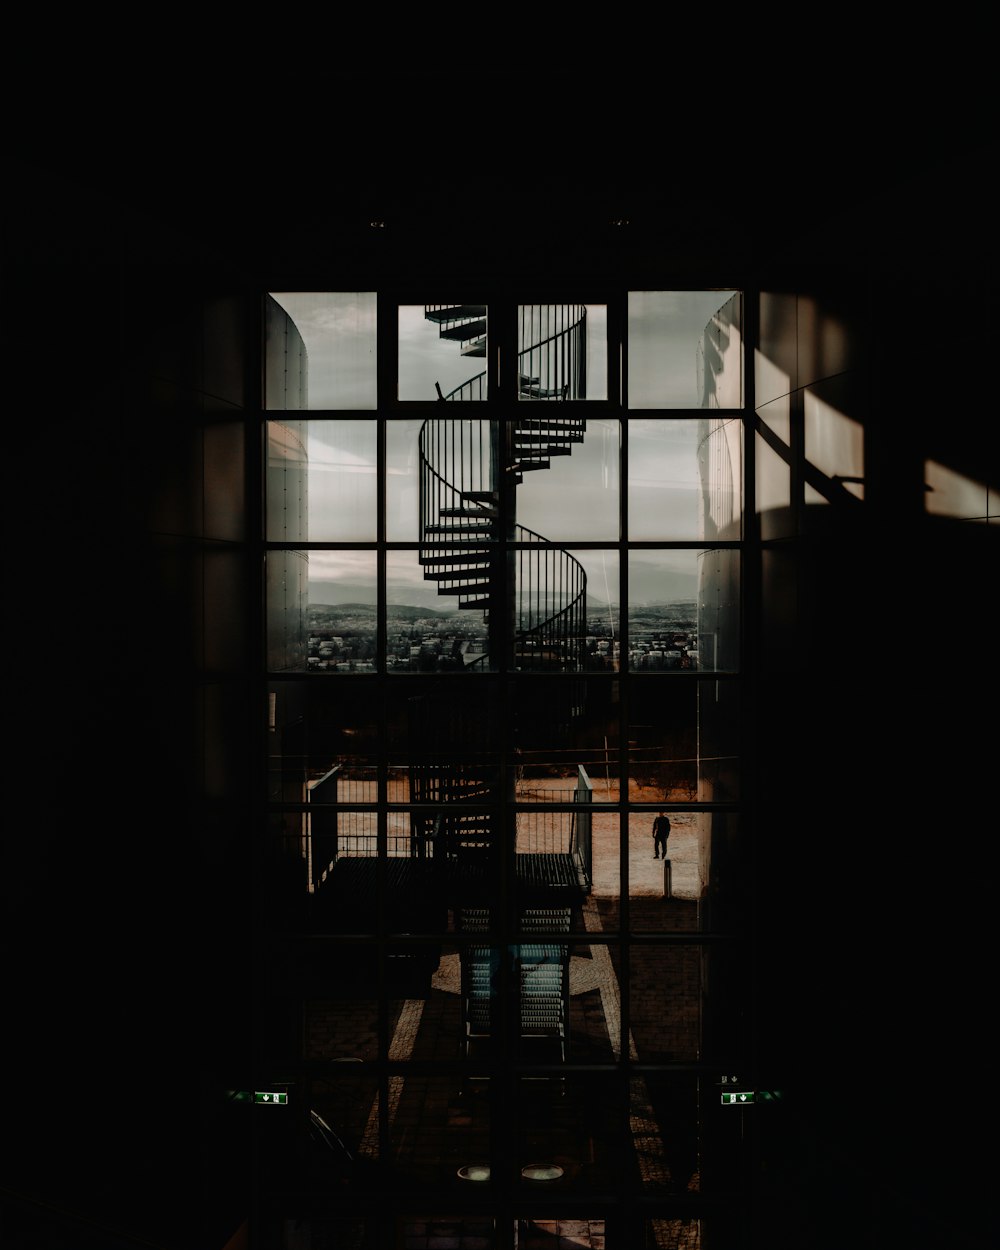 a view of a spiral staircase through a window